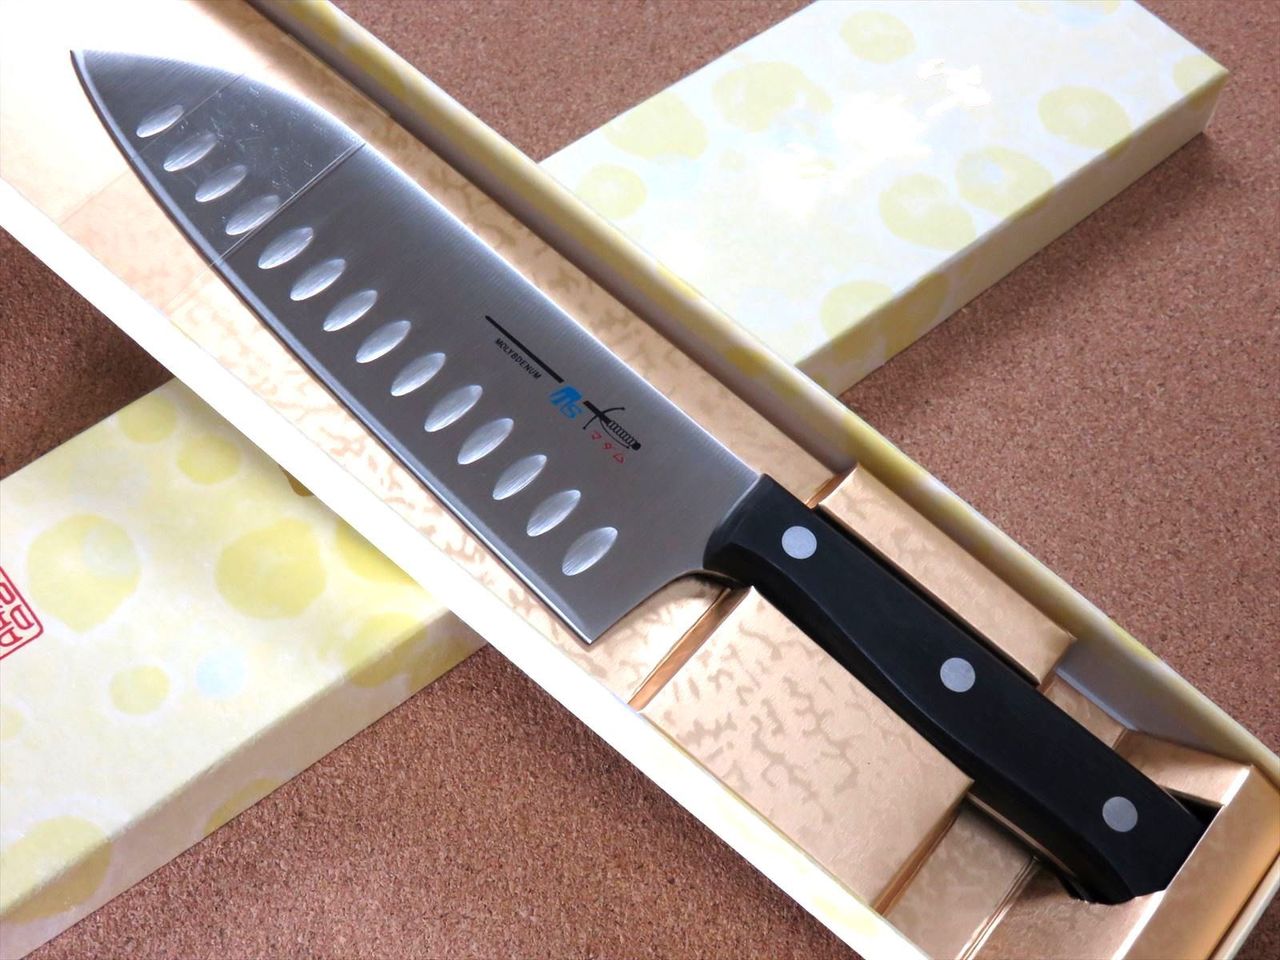 Japanese Kitchen Dimple Santoku Knife 170mm 6.7 inch Meat Fish cut SEKI JAPAN